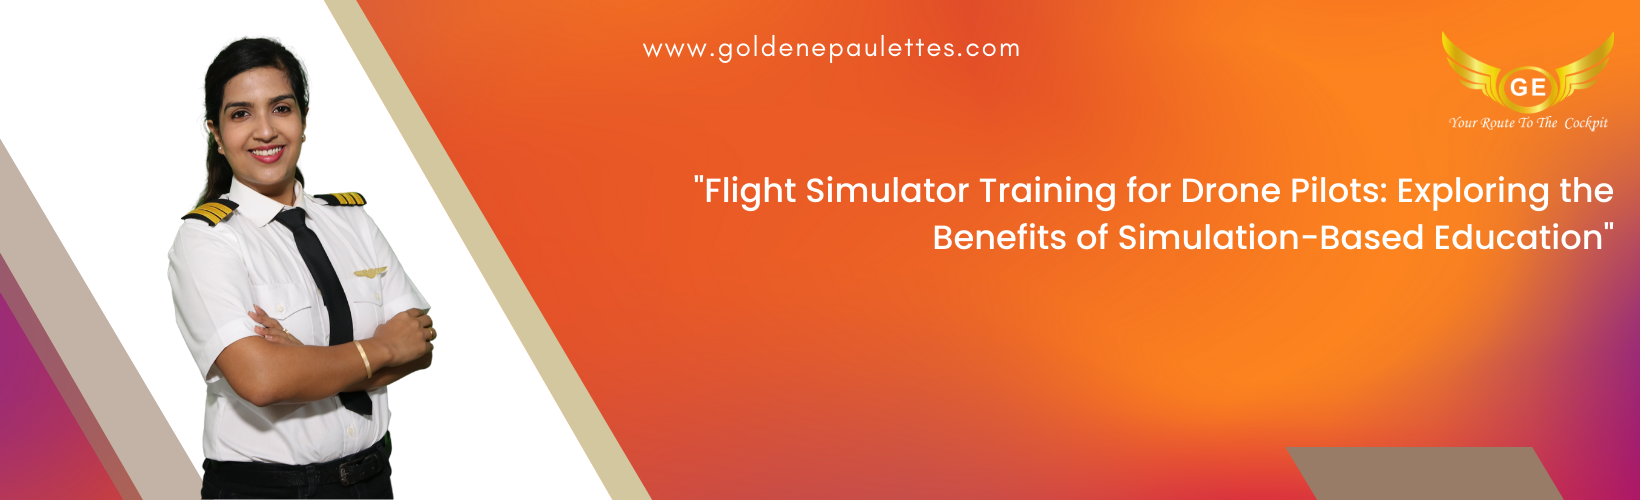 Flight Simulator Training for Drones